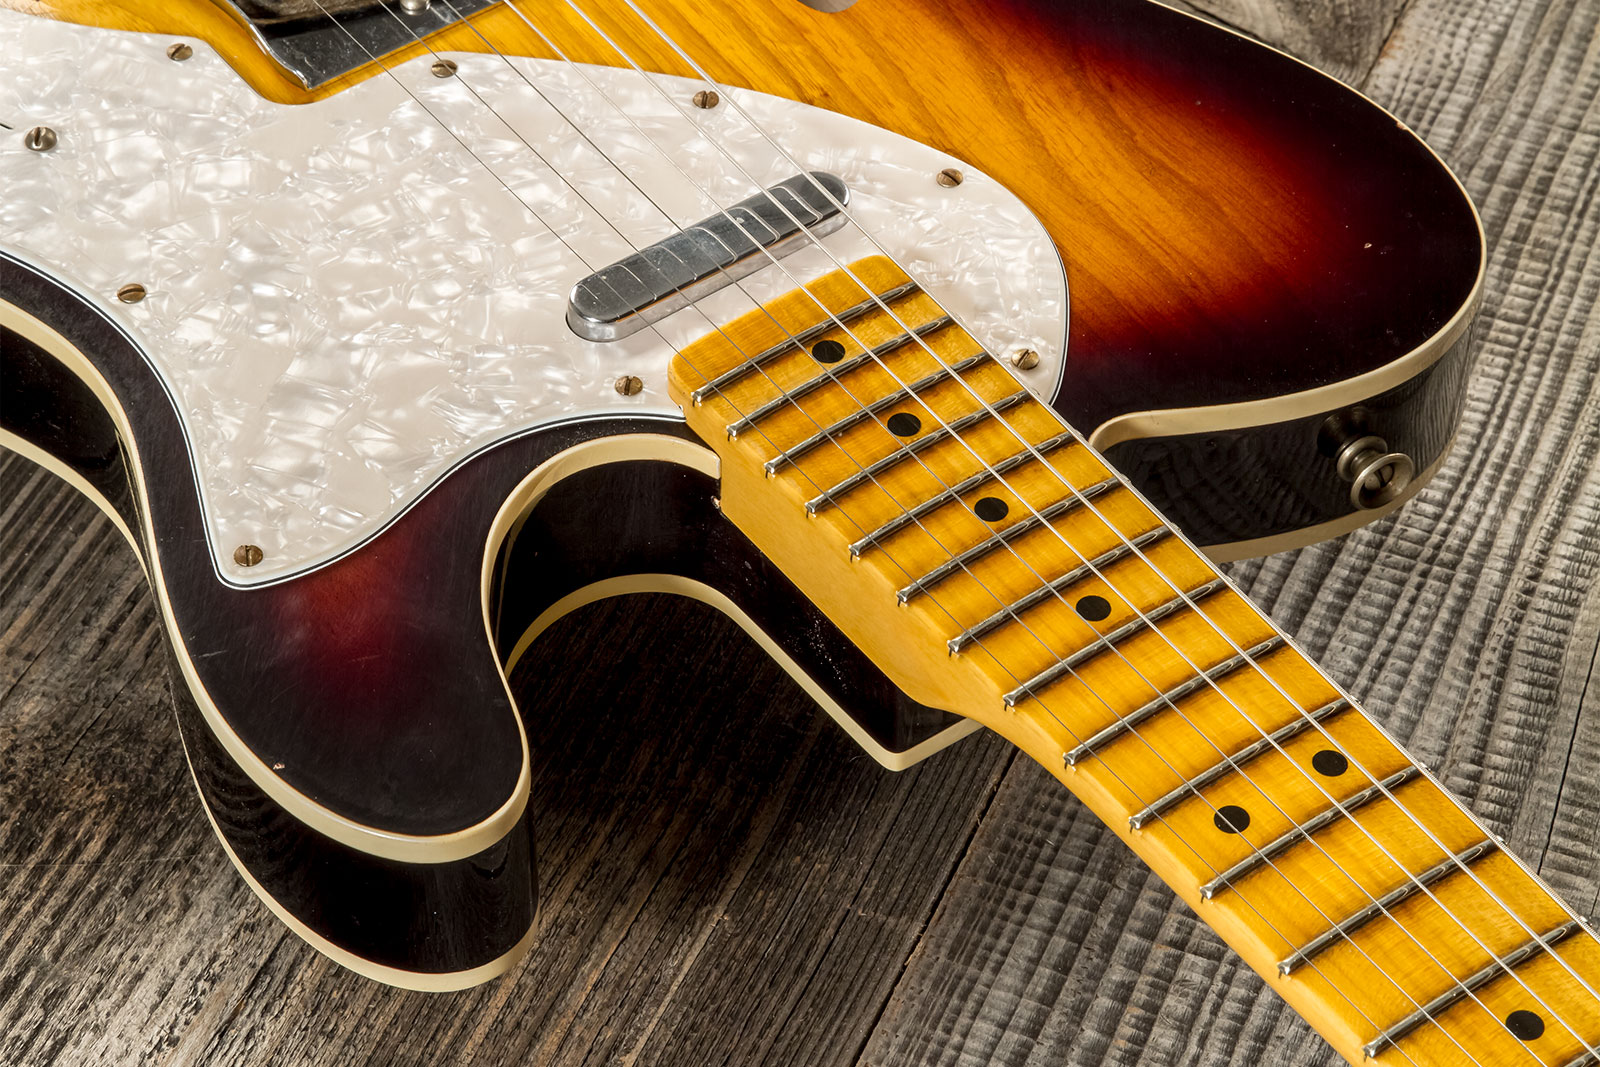 Fender Custom Shop Tele Thinline 50s Mn #cz574212 - Journeyman Relic Aged 2-color Sunburst - Tel shape electric guitar - Variation 5